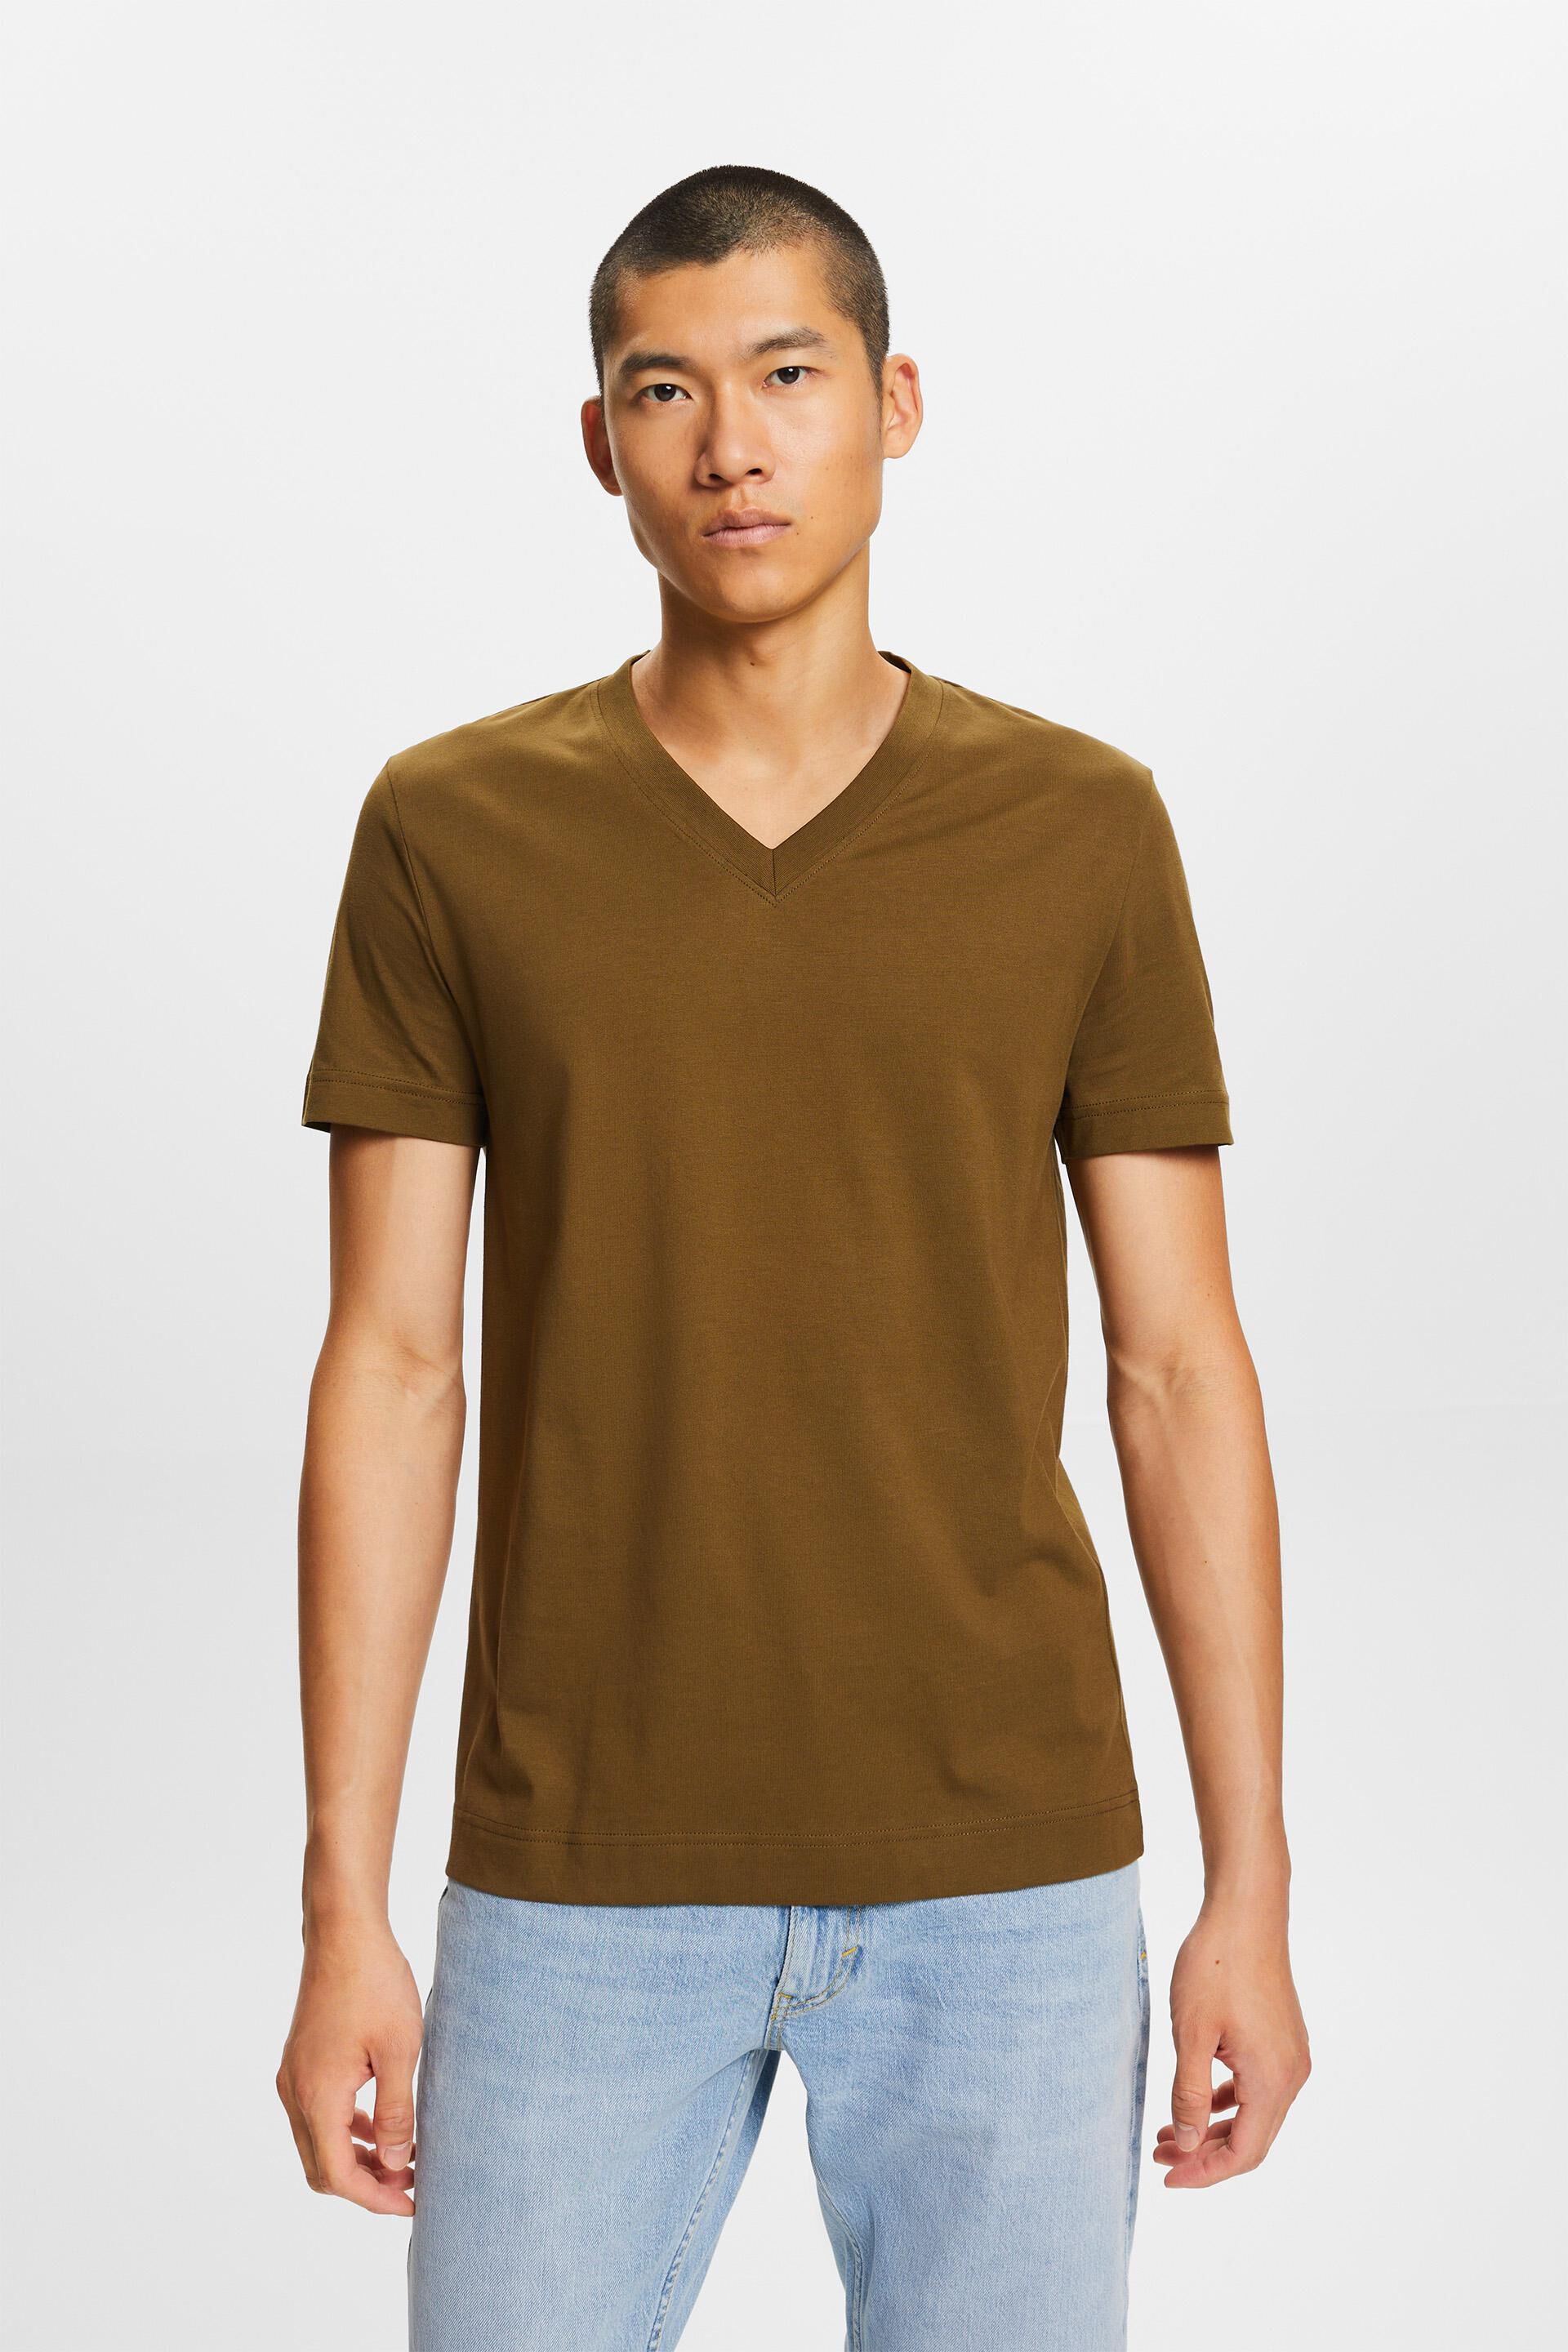 Esprit Jersey cotton t-shirt, 100% V-neck